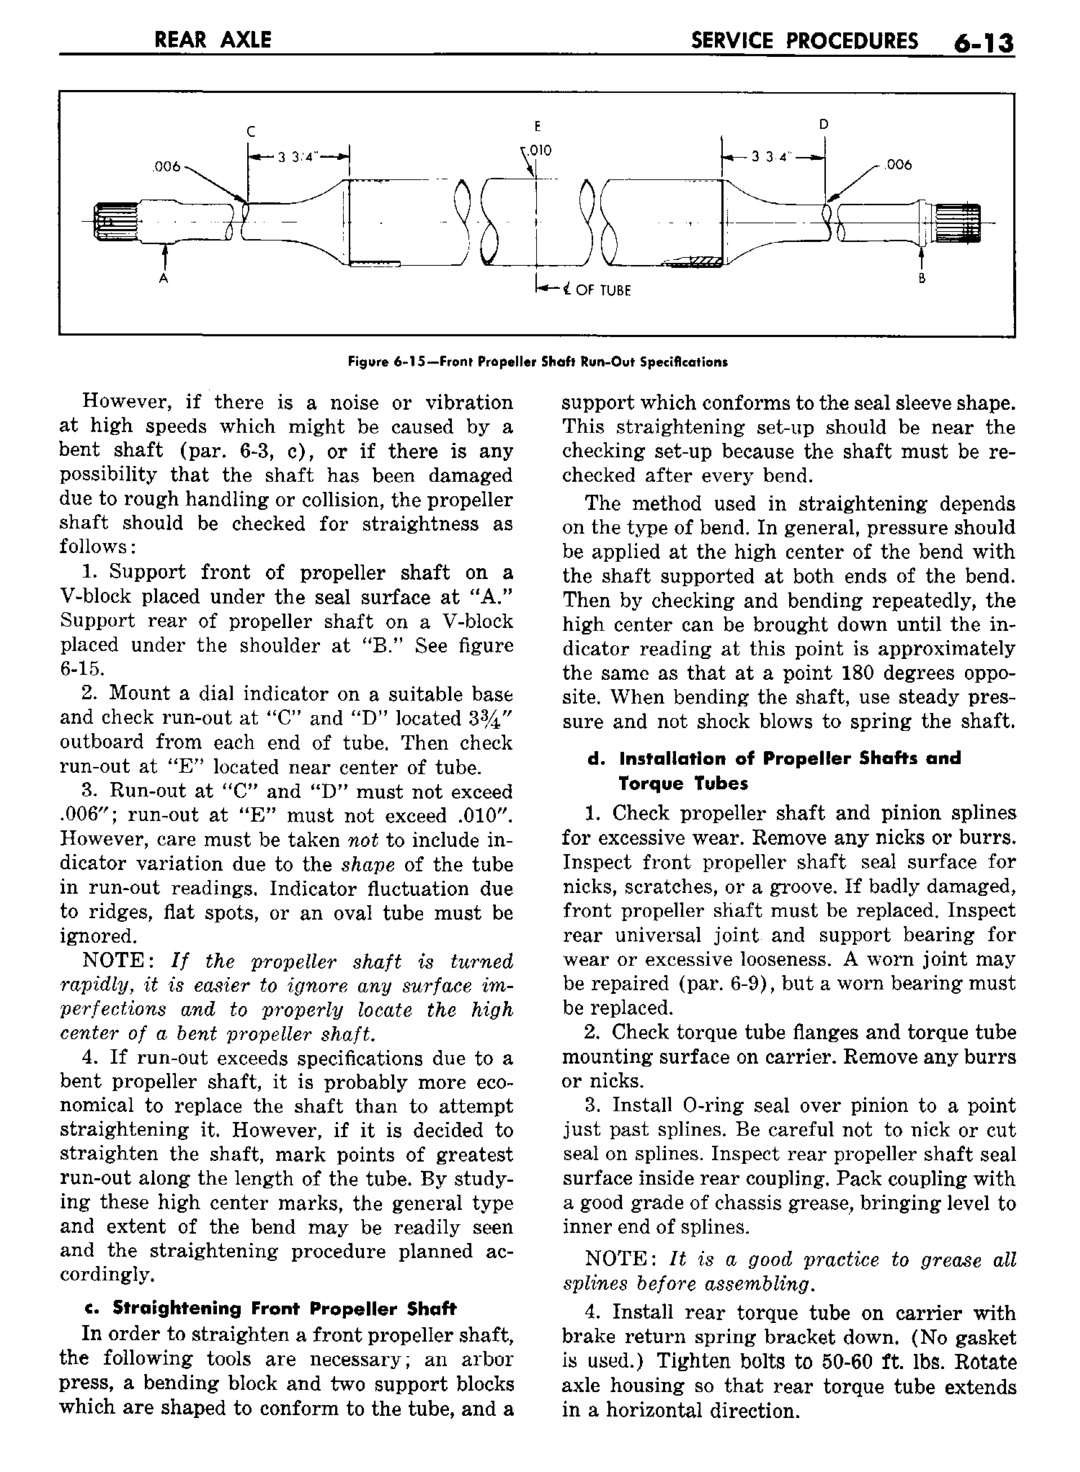 n_07 1960 Buick Shop Manual - Rear Axle-013-013.jpg